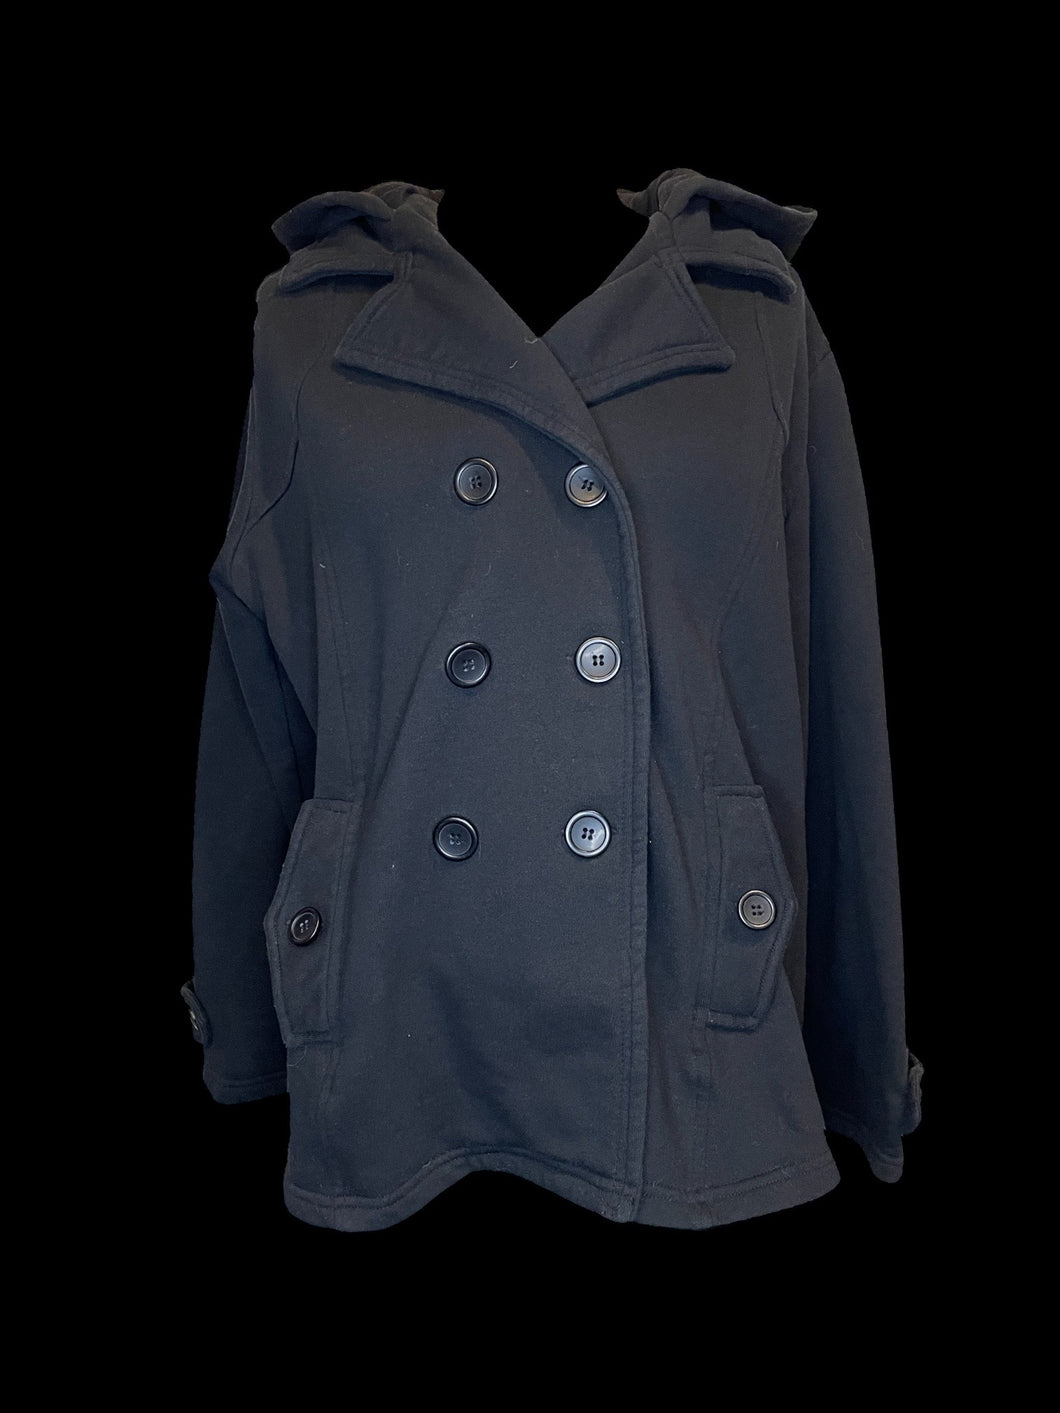 XL Black long sleeve double breasted coat w/ hood, pockets, & belt loops